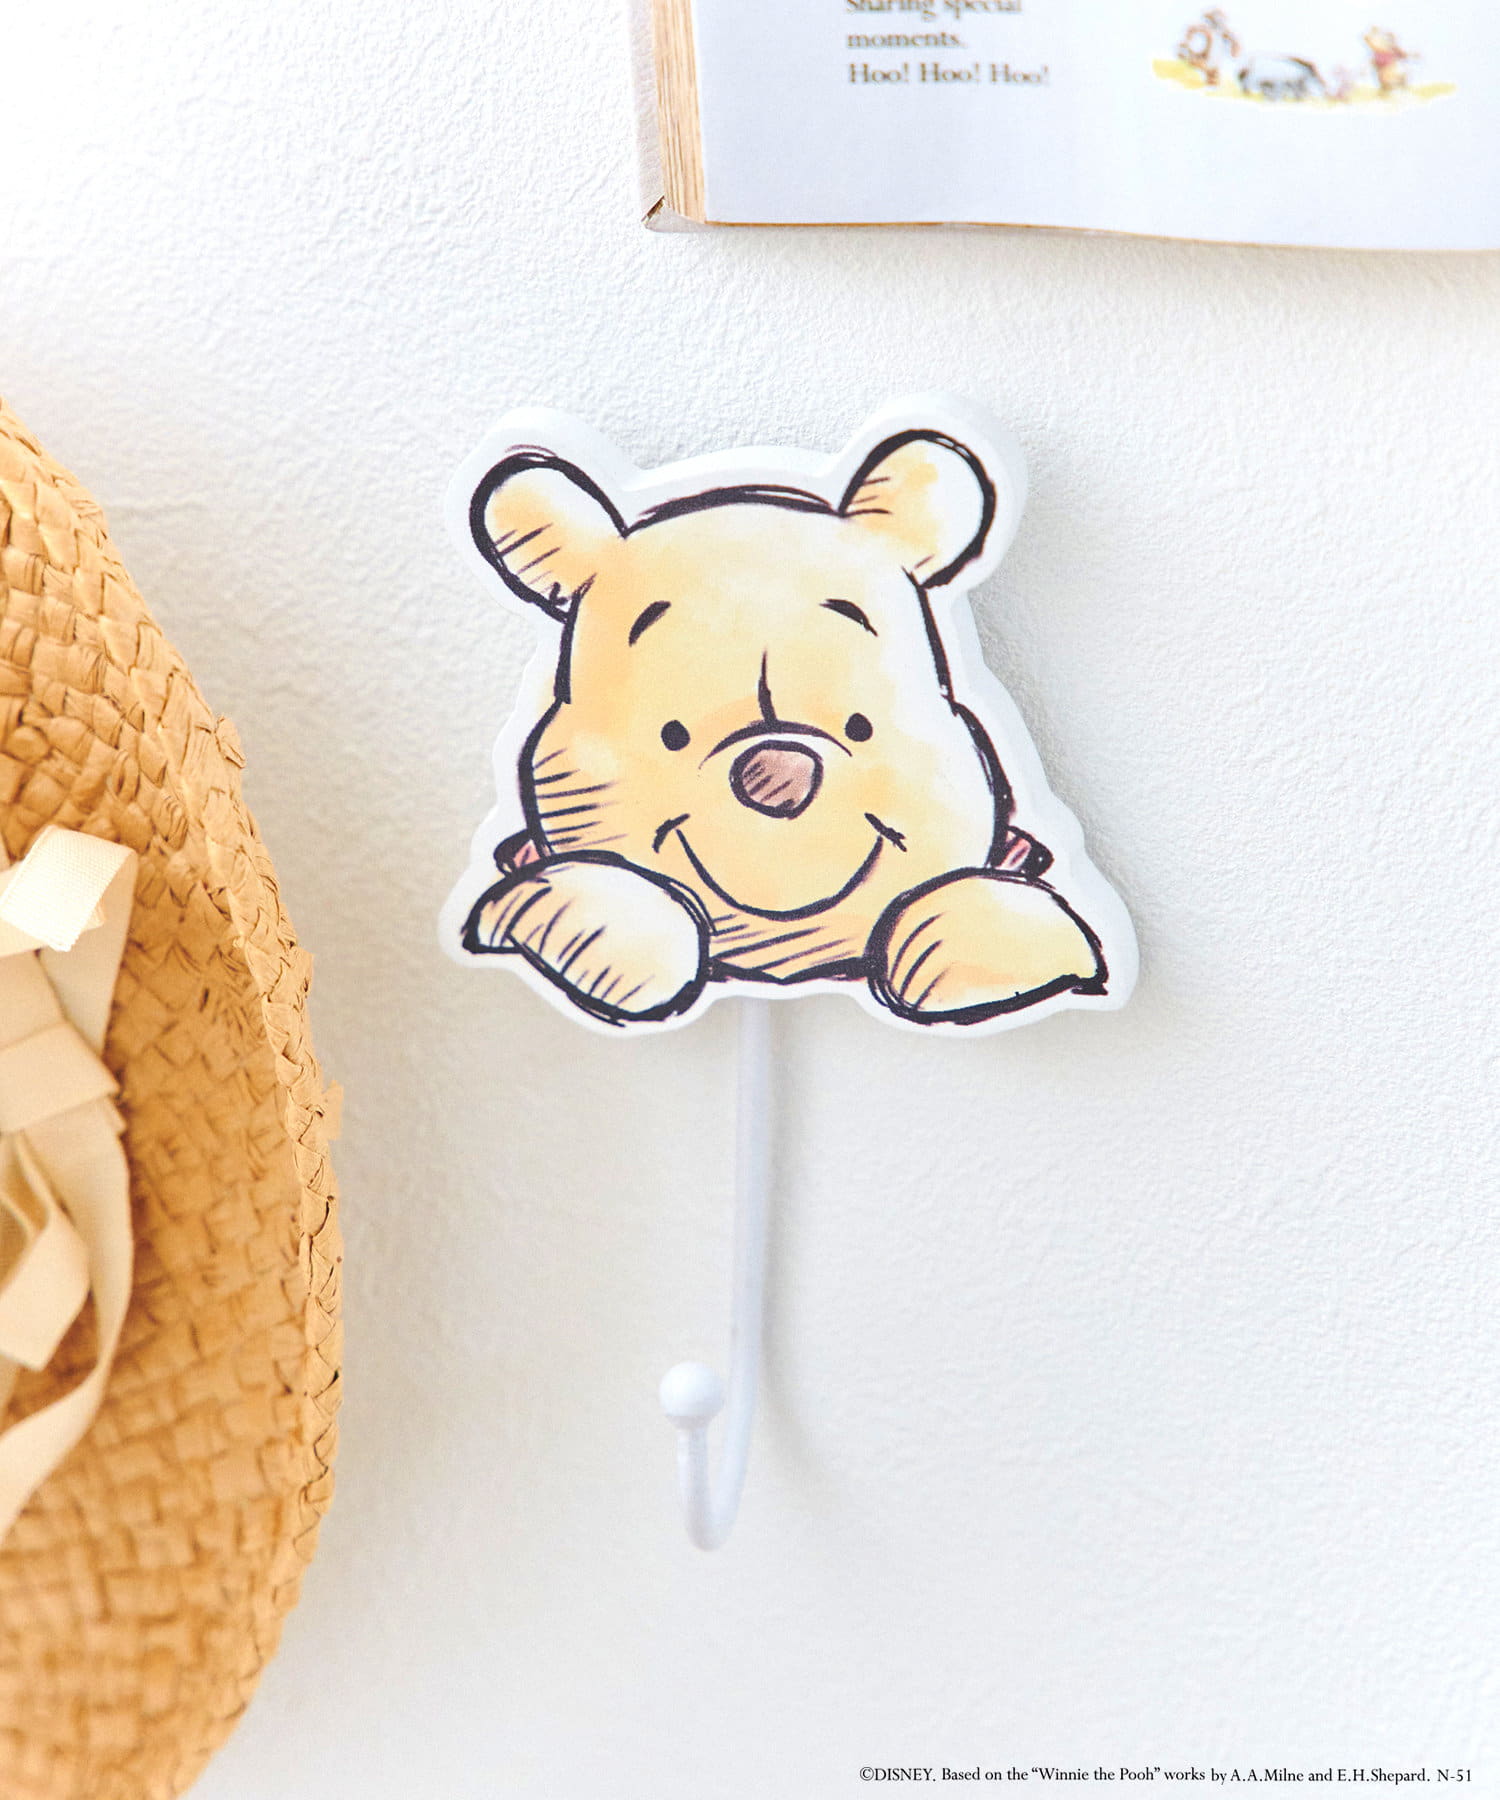 Winnie the Pooh〜「くまのプーさん」限定アイテム本日発売!! - salut